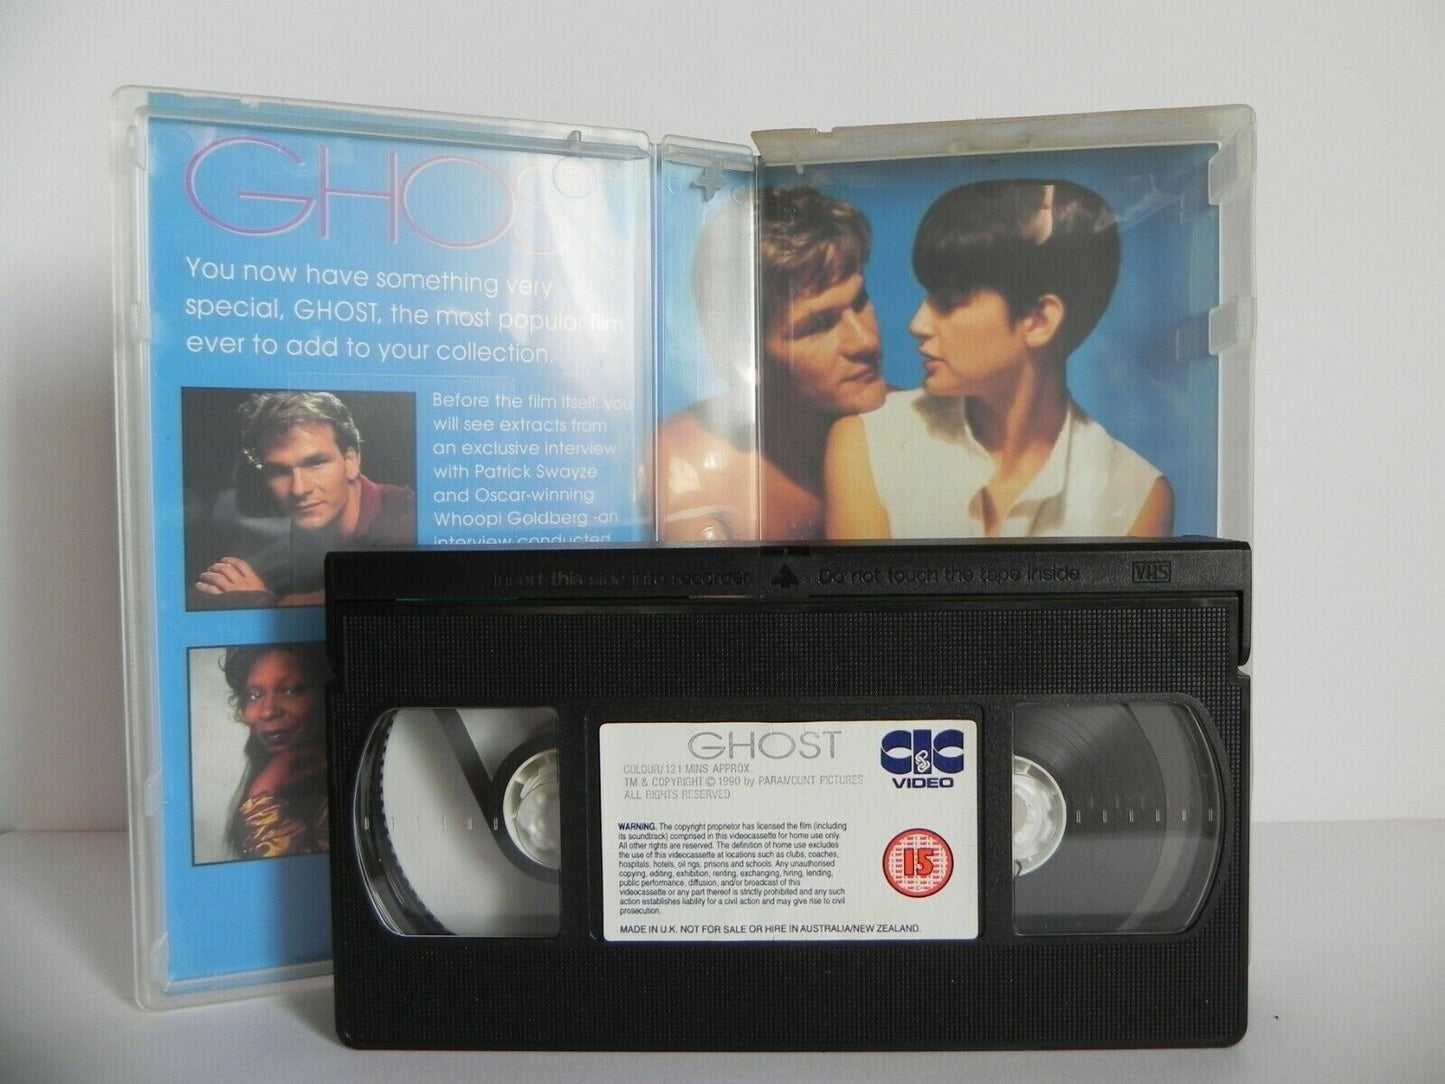 Ghost - Classic Romance - Patrick Swayze - Demi Moore - Whoopi Goldberg - VHS-